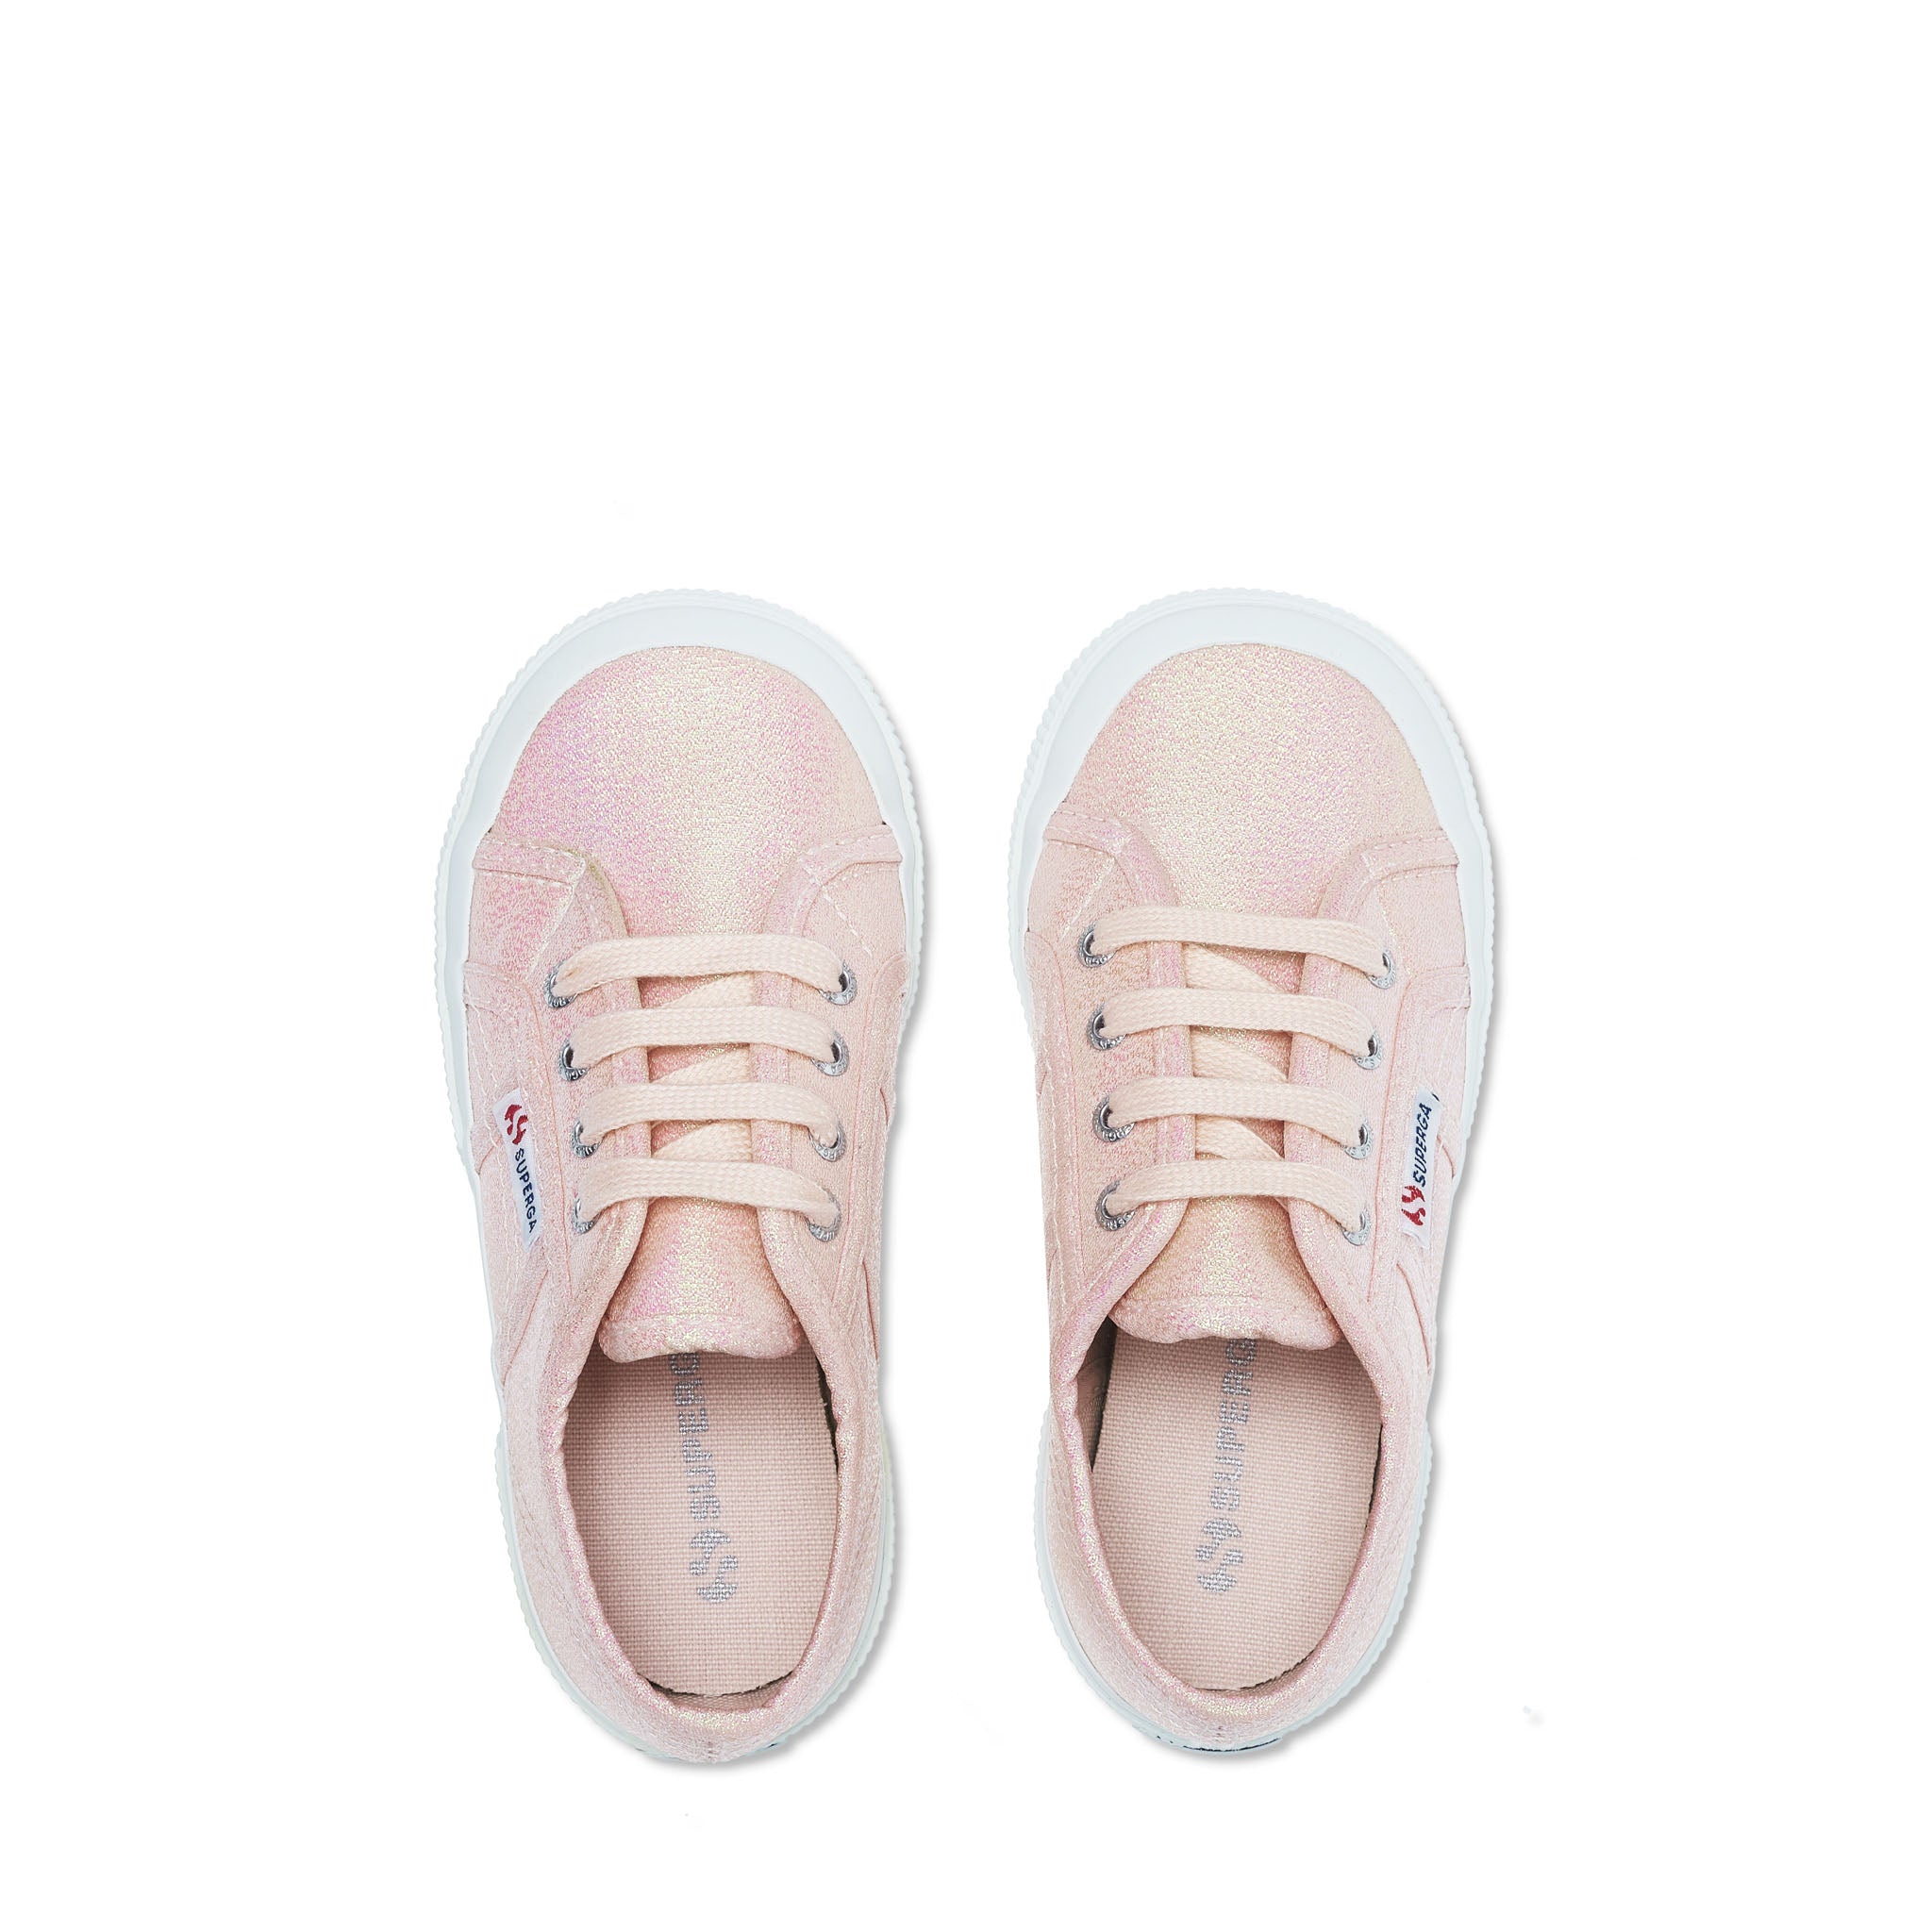 Superga 2750 Kids Lam√© Sneakers - Iridescent Pink. Top view.